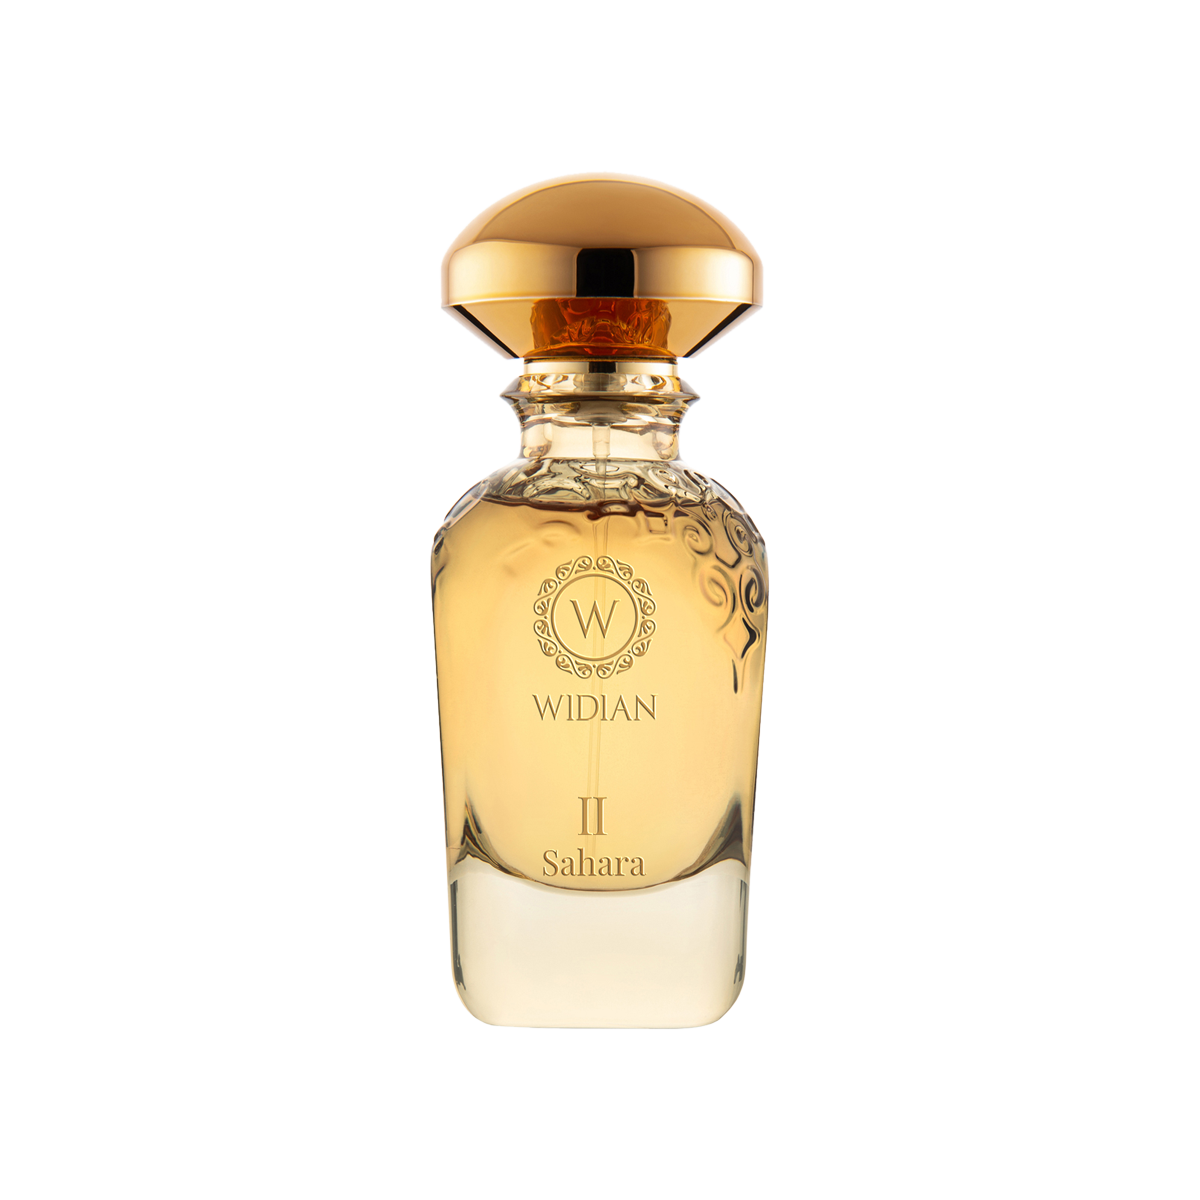 Widian - Gold II Sahara Eau de Parfum